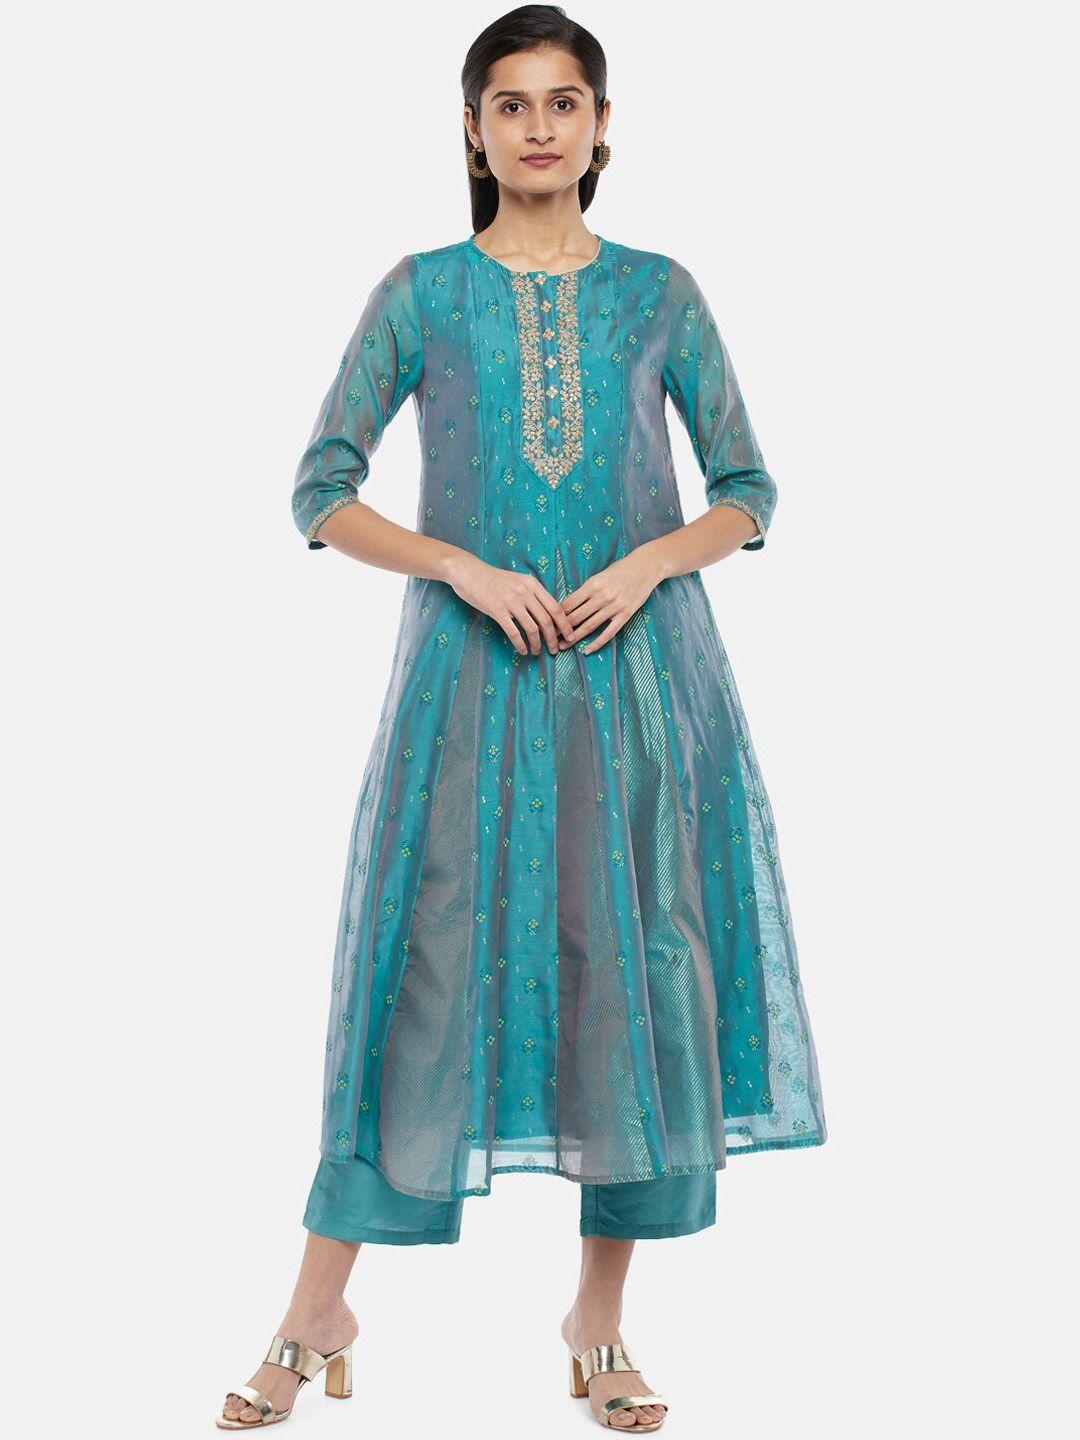 rangmanch-by-pantaloons-women-blue-ethnic-motifs-embroidered-chanderi-cotton-kurta-set